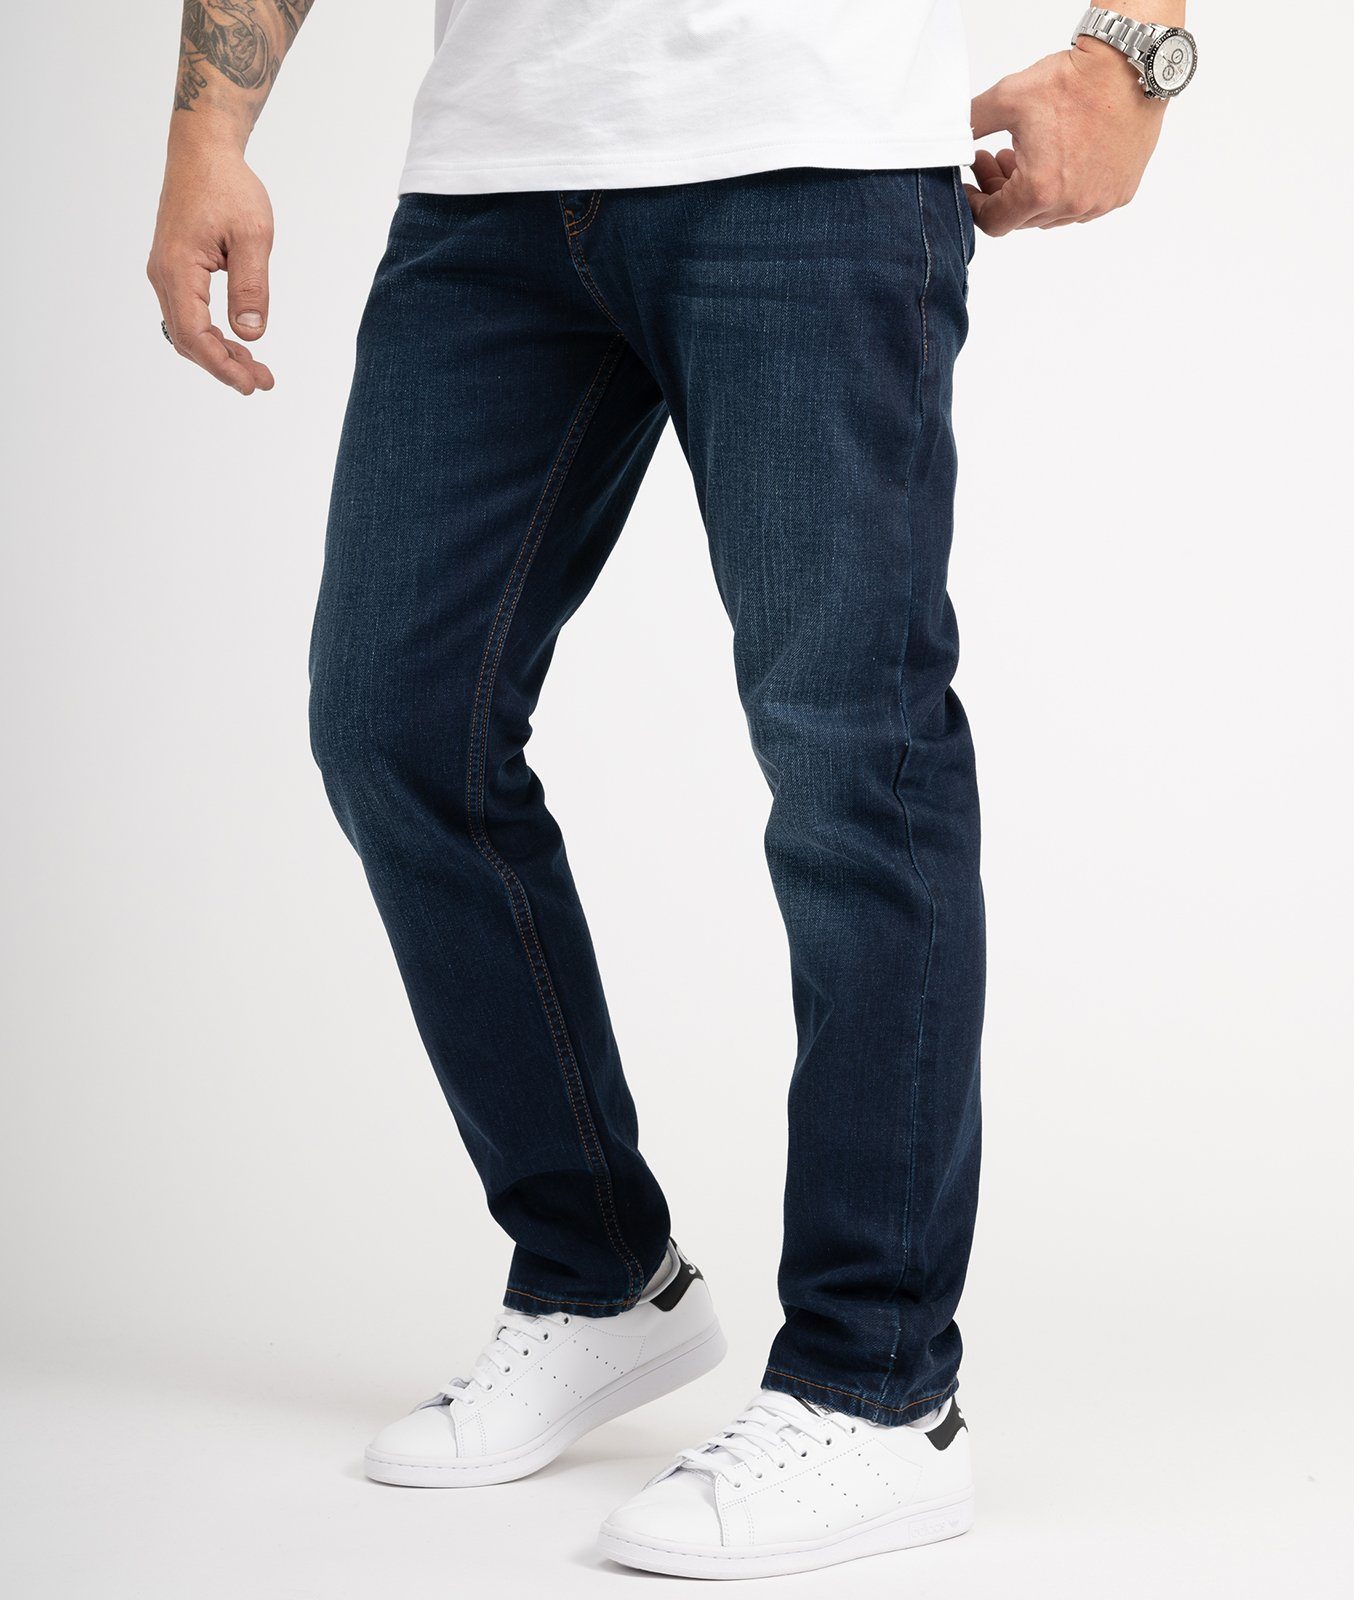 Indumentum Straight-Jeans Herren Fit IC-700 Comfort Jeans